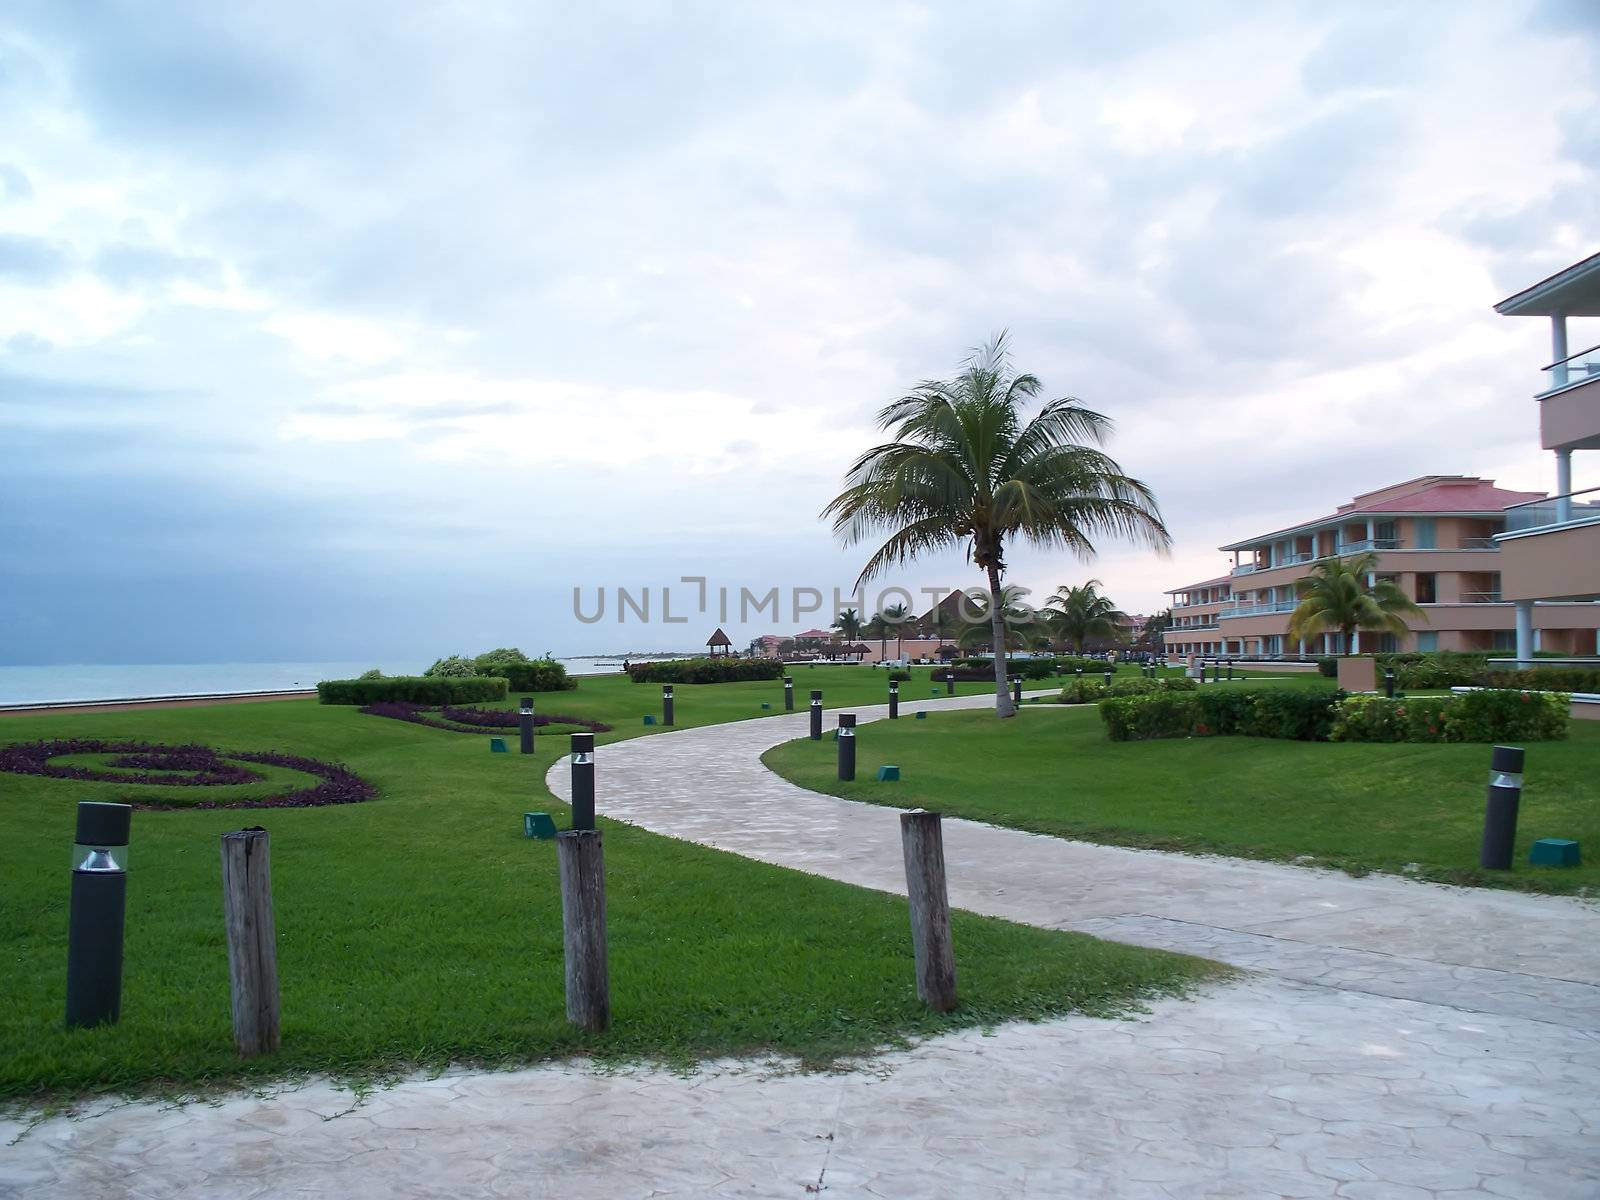 a coastal beach path with palm trees and buildings